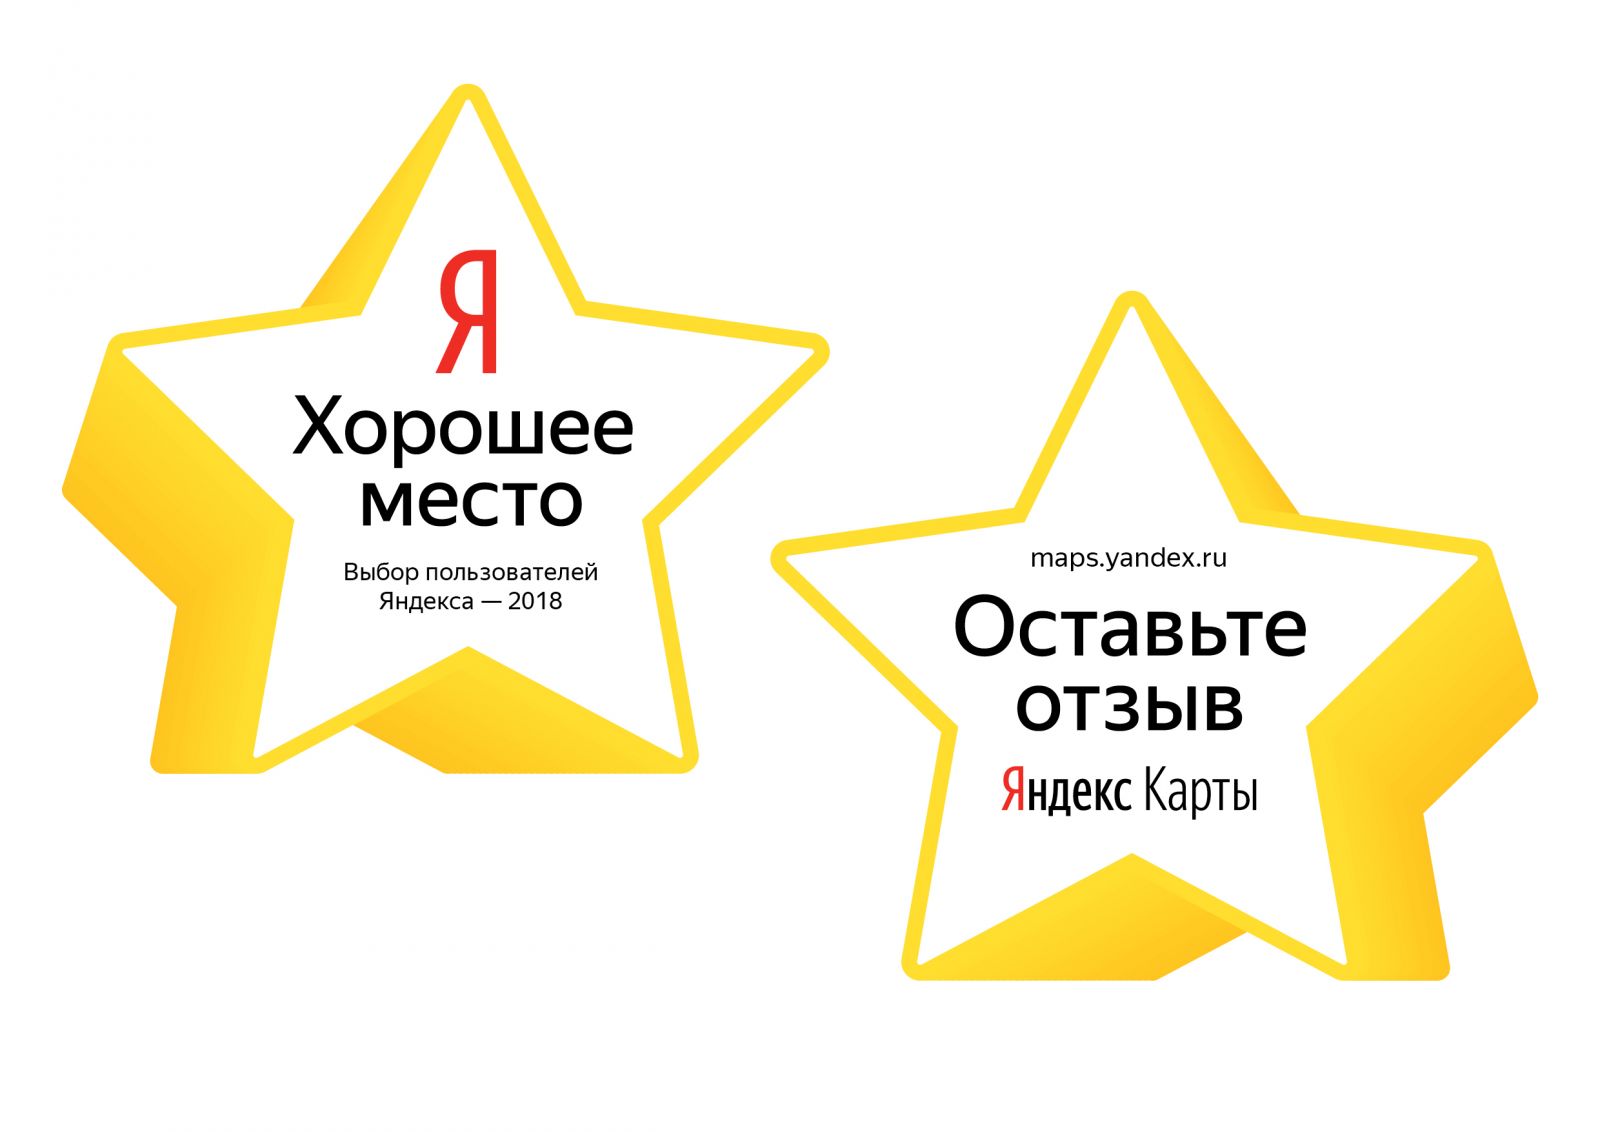 Оценка Магазинов На Яндекс